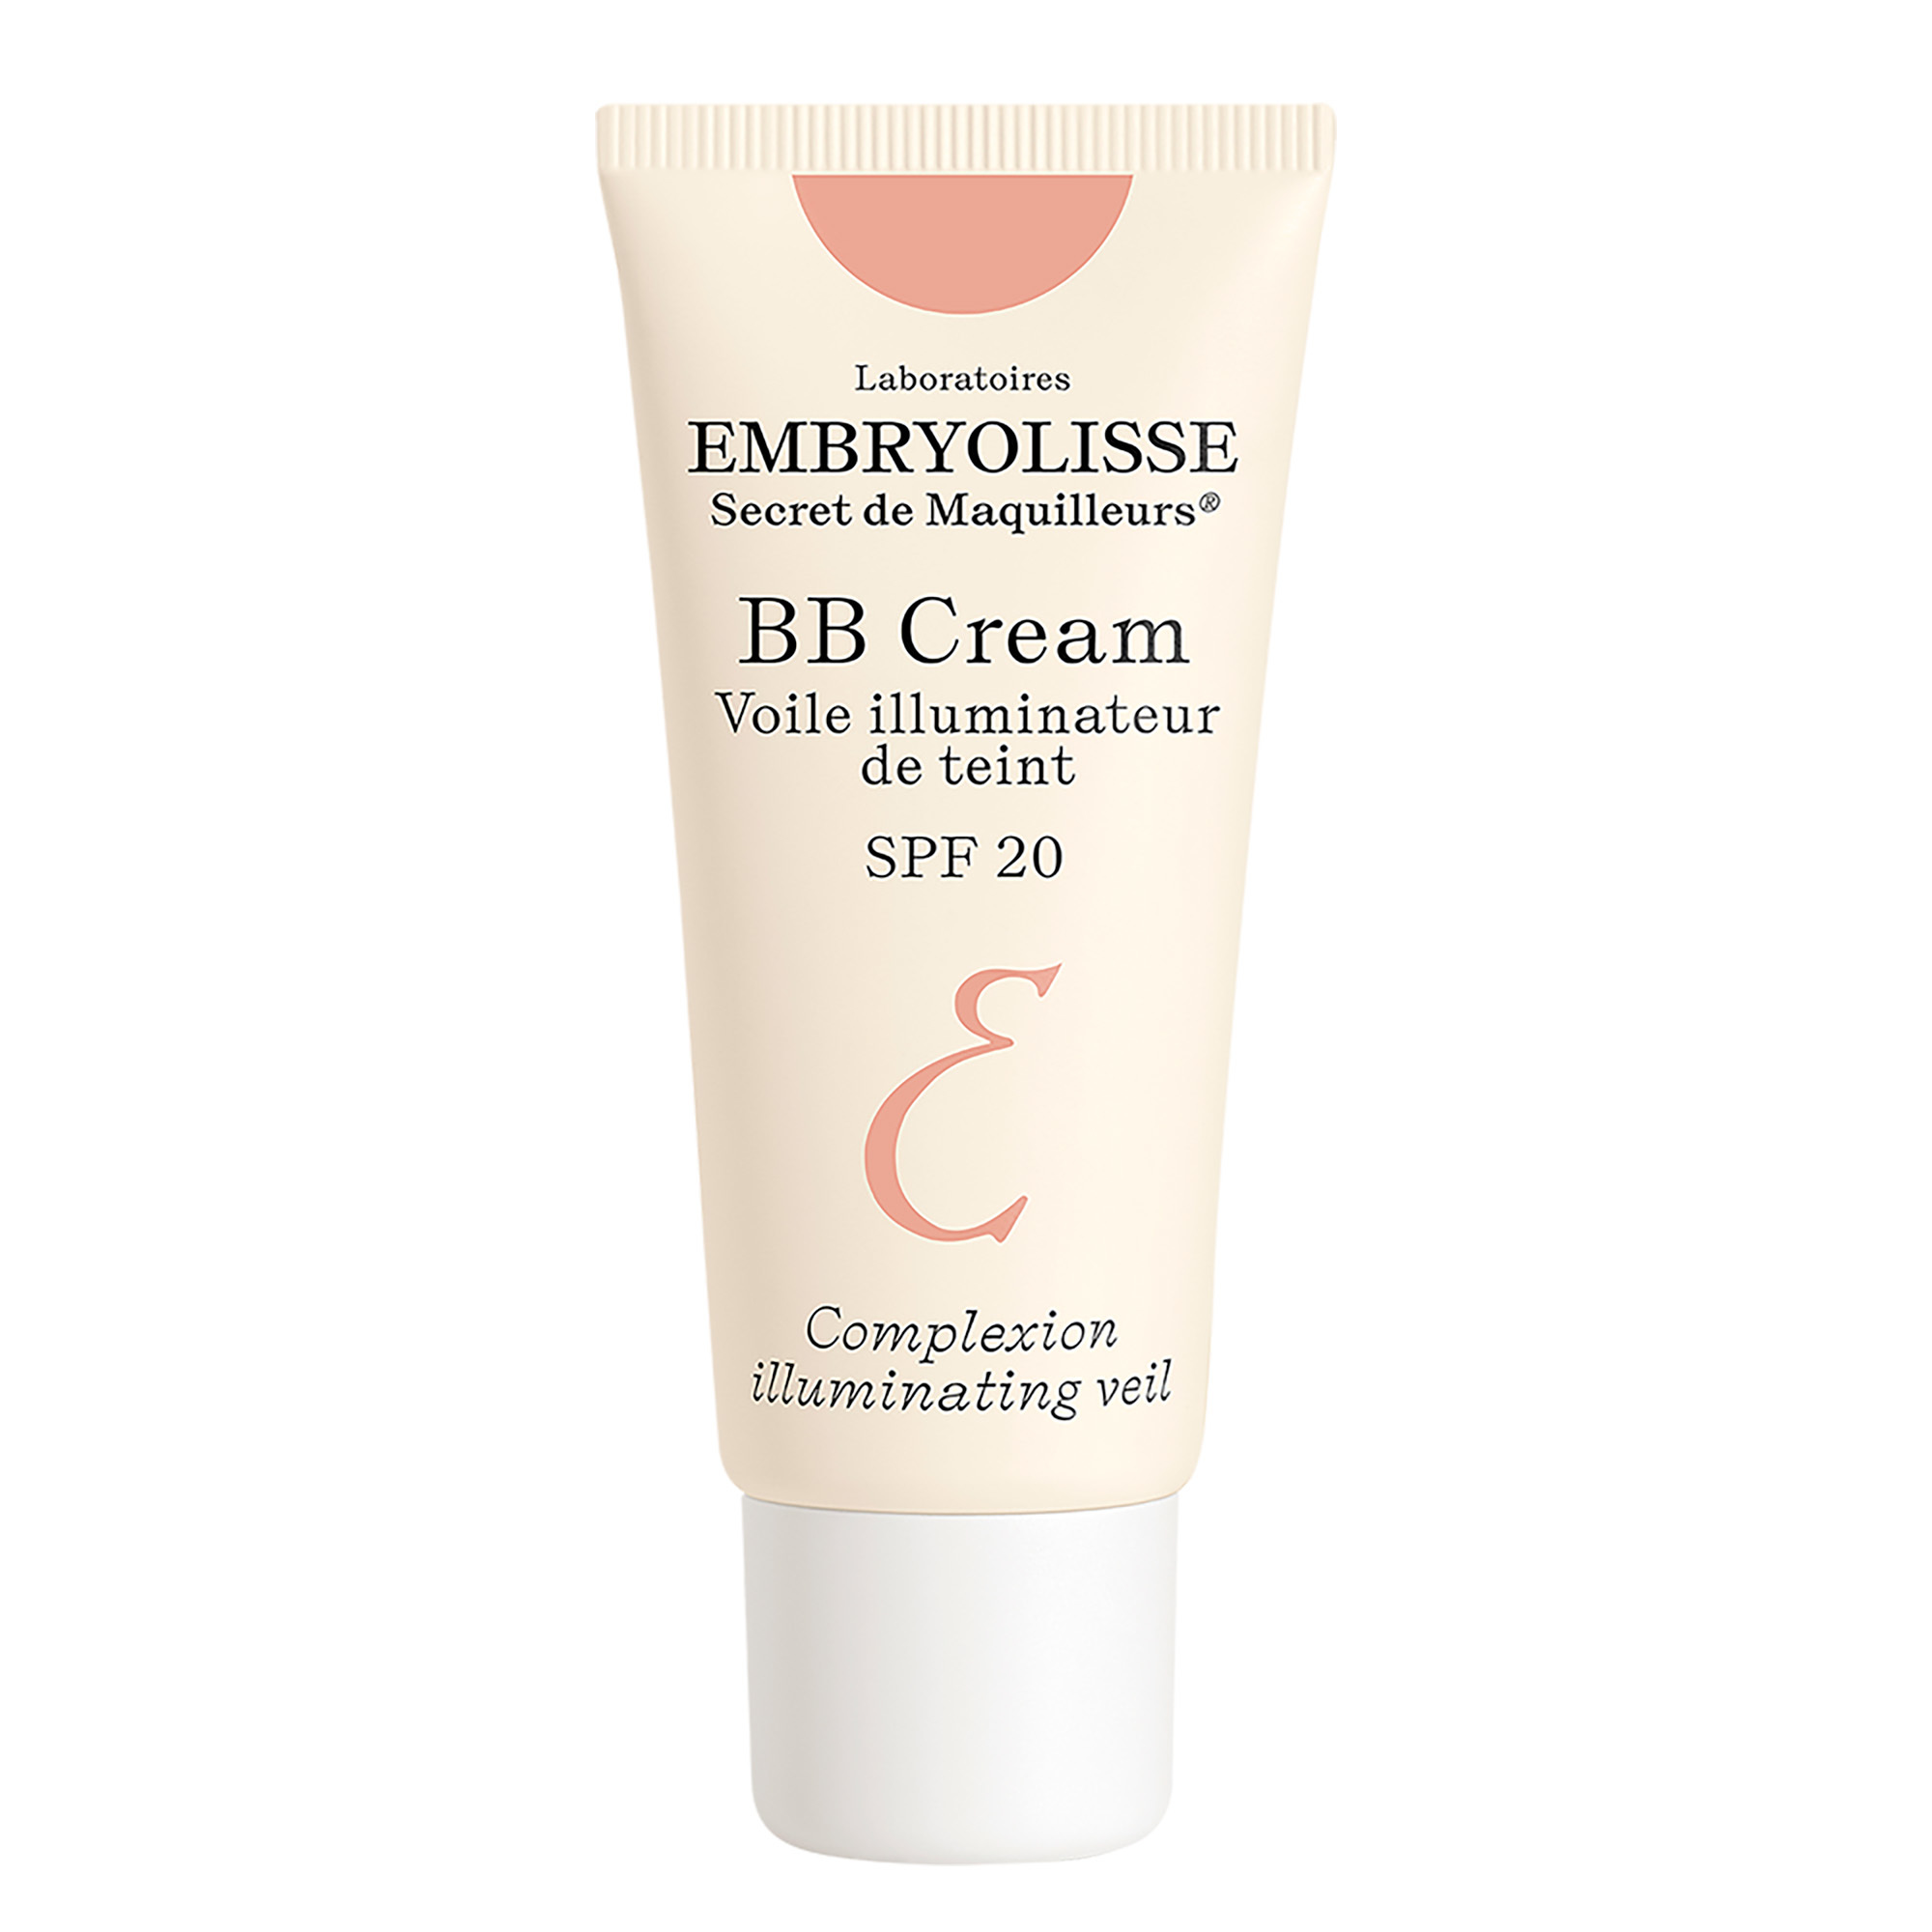 Embryolisse Complexion Illuminating Veil BB Cream SPF20, 30 ml